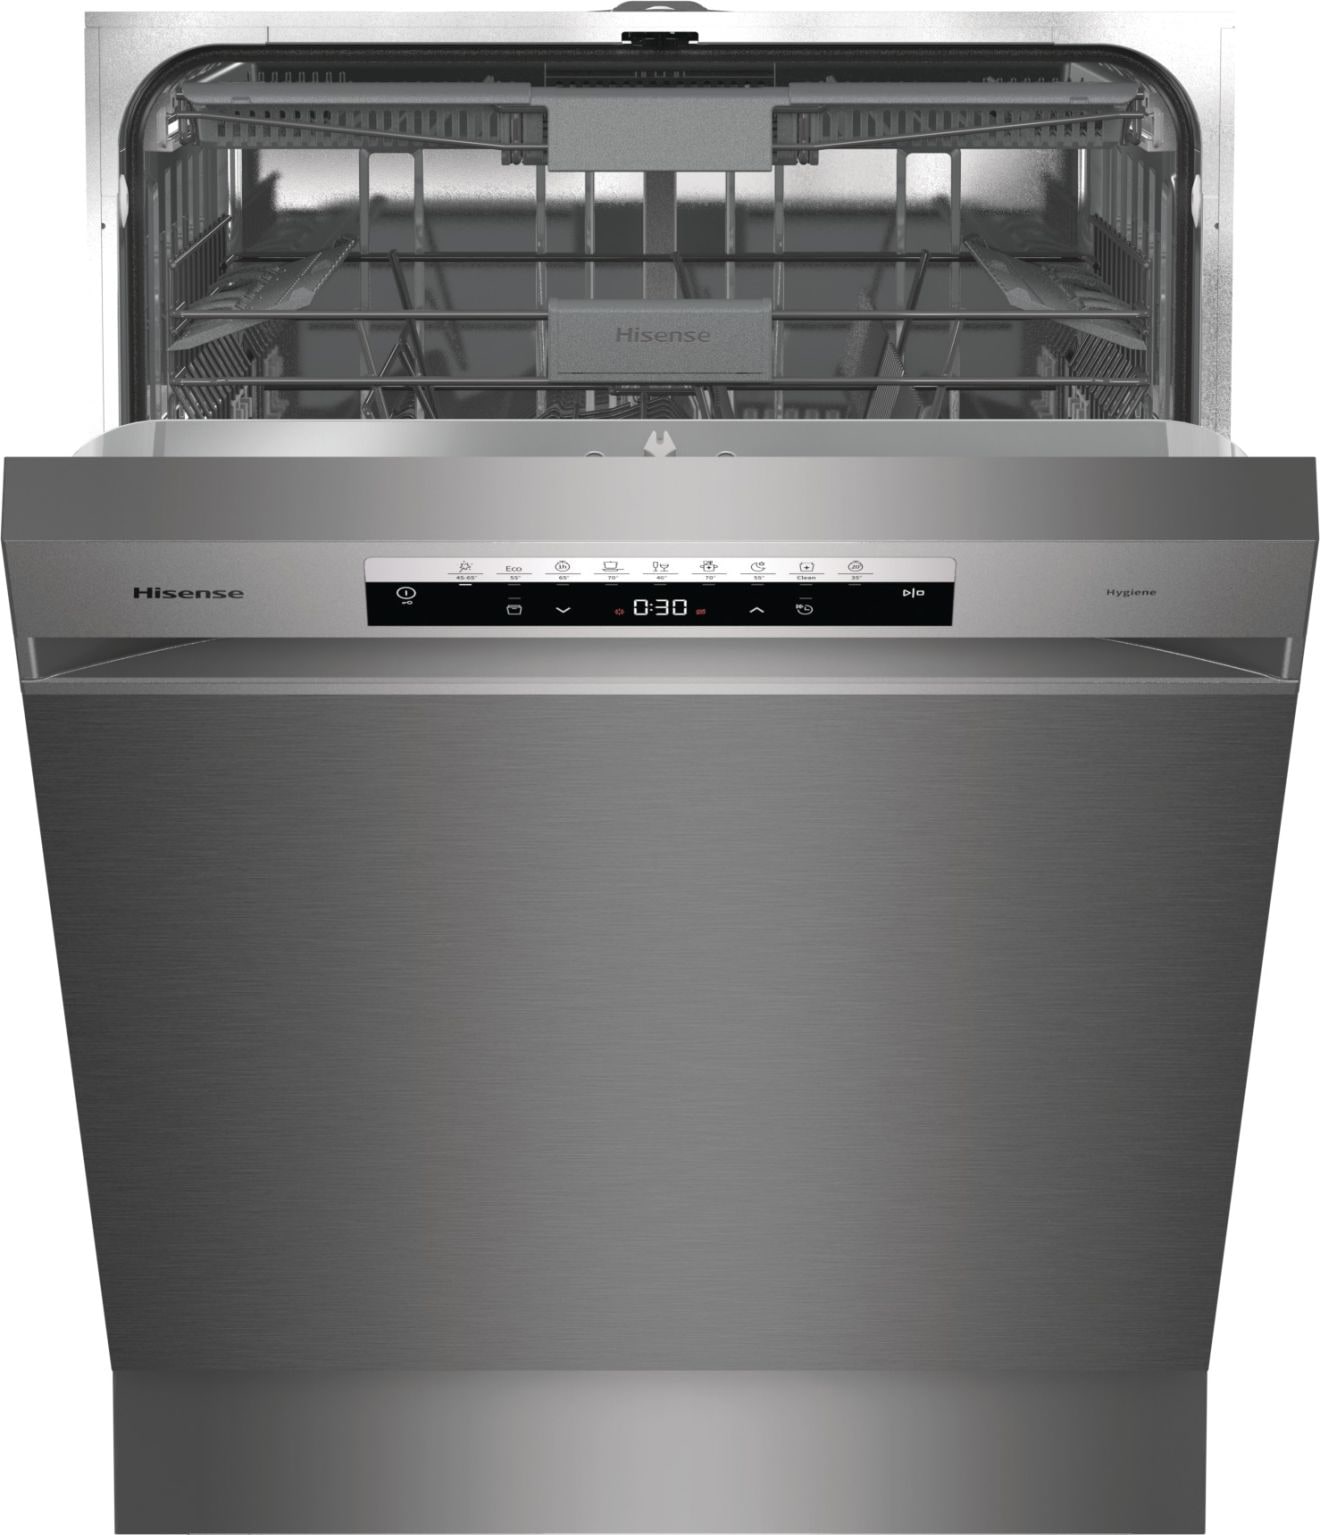 Hisense Dishwasher HU663C60BX (Dark grey metallic)